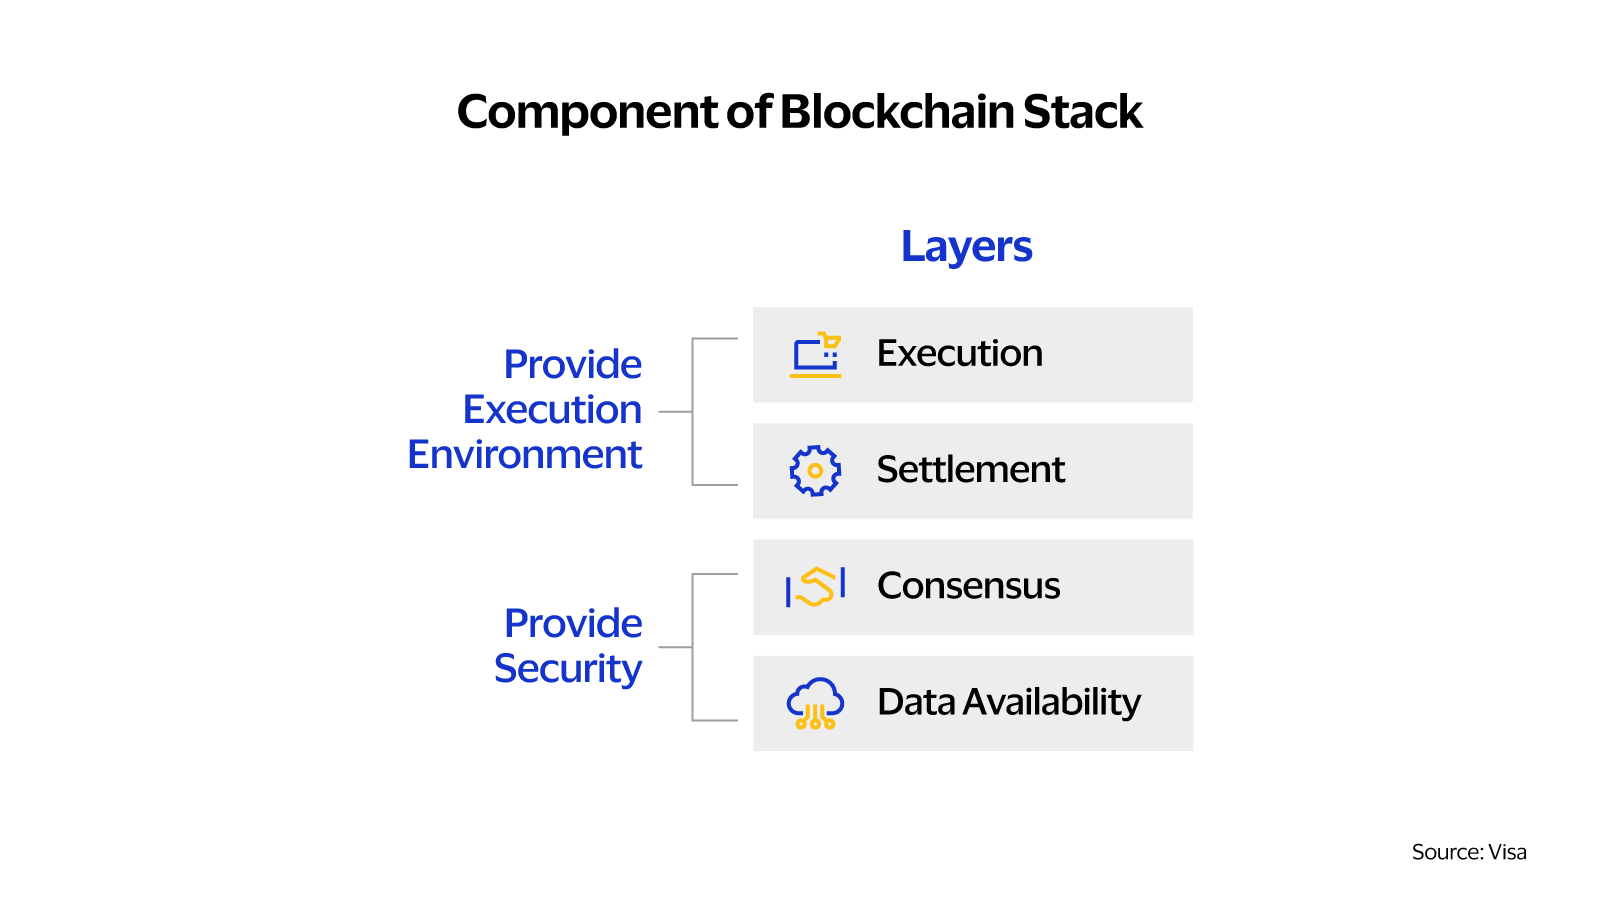 Component of Blockchain Stack. See image description for details.